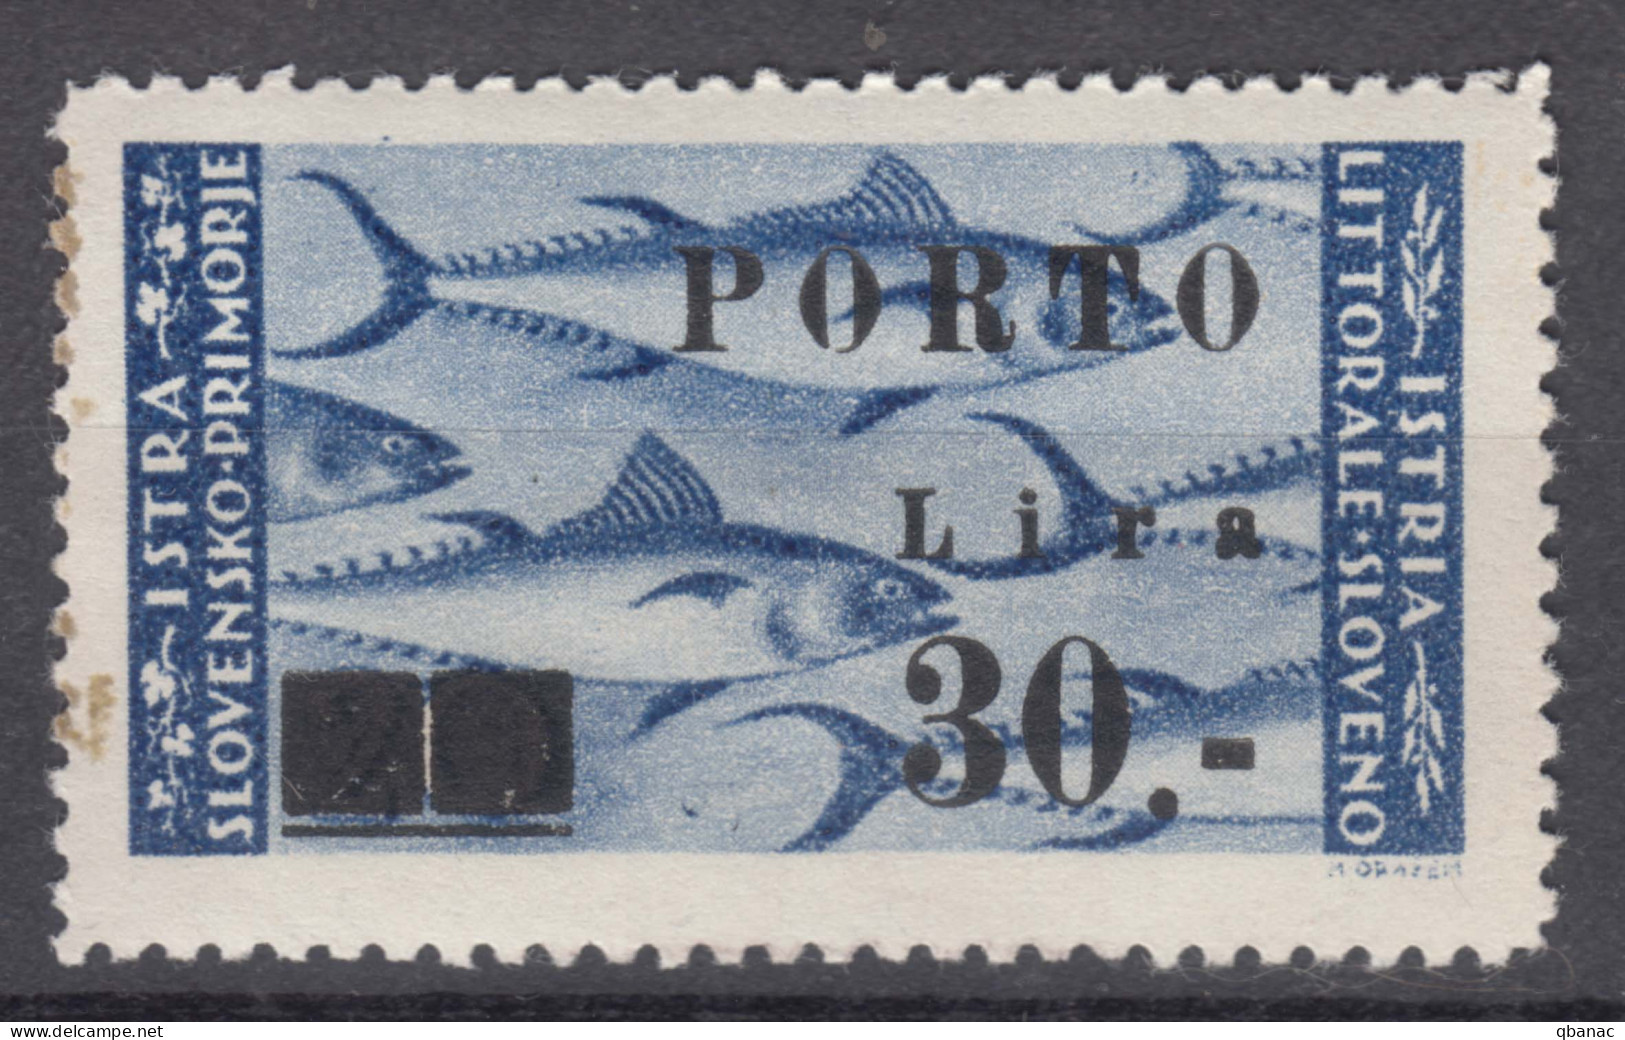 Istria Litorale Yugoslavia Occupation, Porto 1946 Sassone#19 Overprint II, Mint Never Hinged - Occ. Yougoslave: Istria